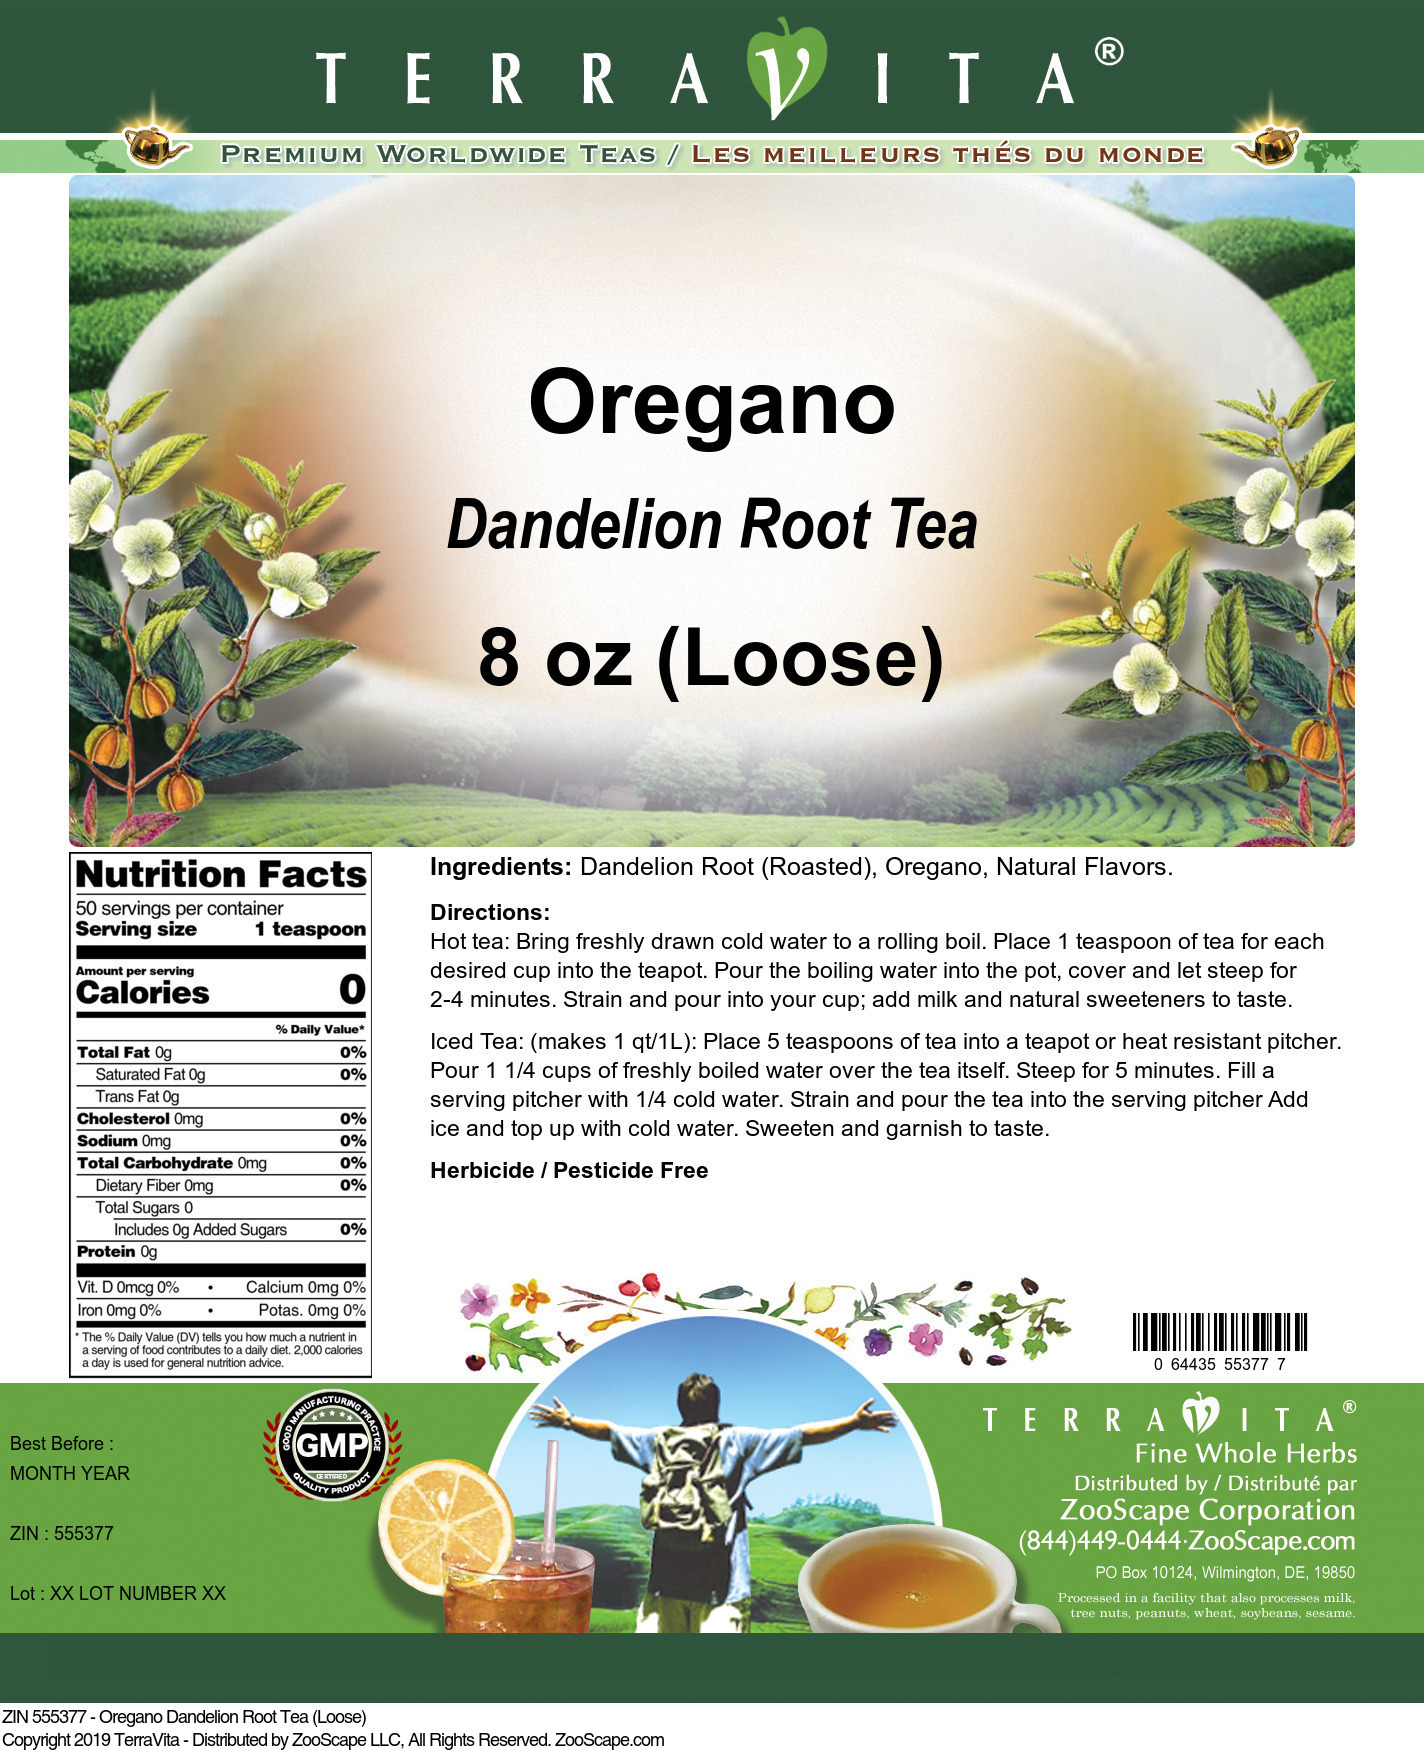 Oregano Dandelion Root Tea (Loose) - Label